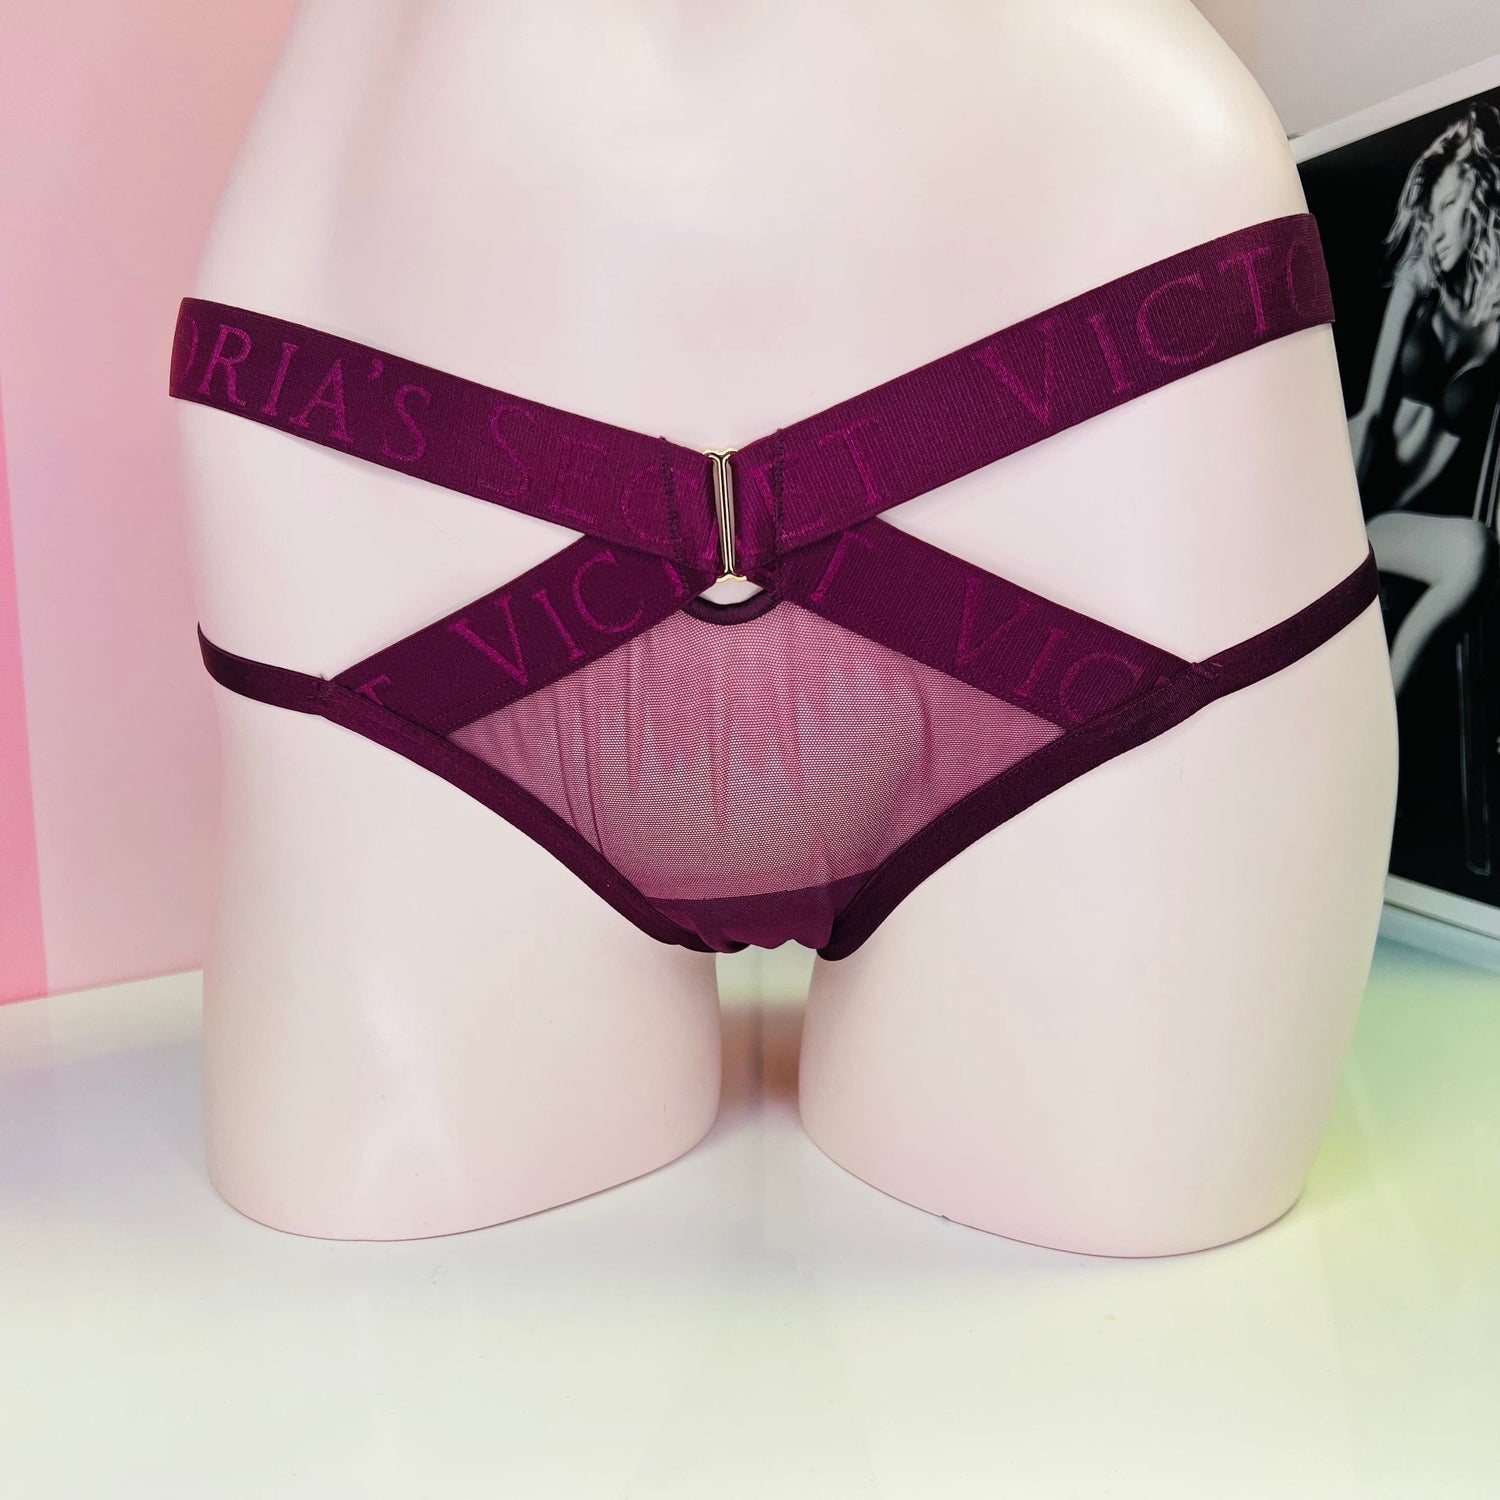 Kalhotky s pásky - Vínová / M / Nové se štítky - Cheeky Victoria’s Secret